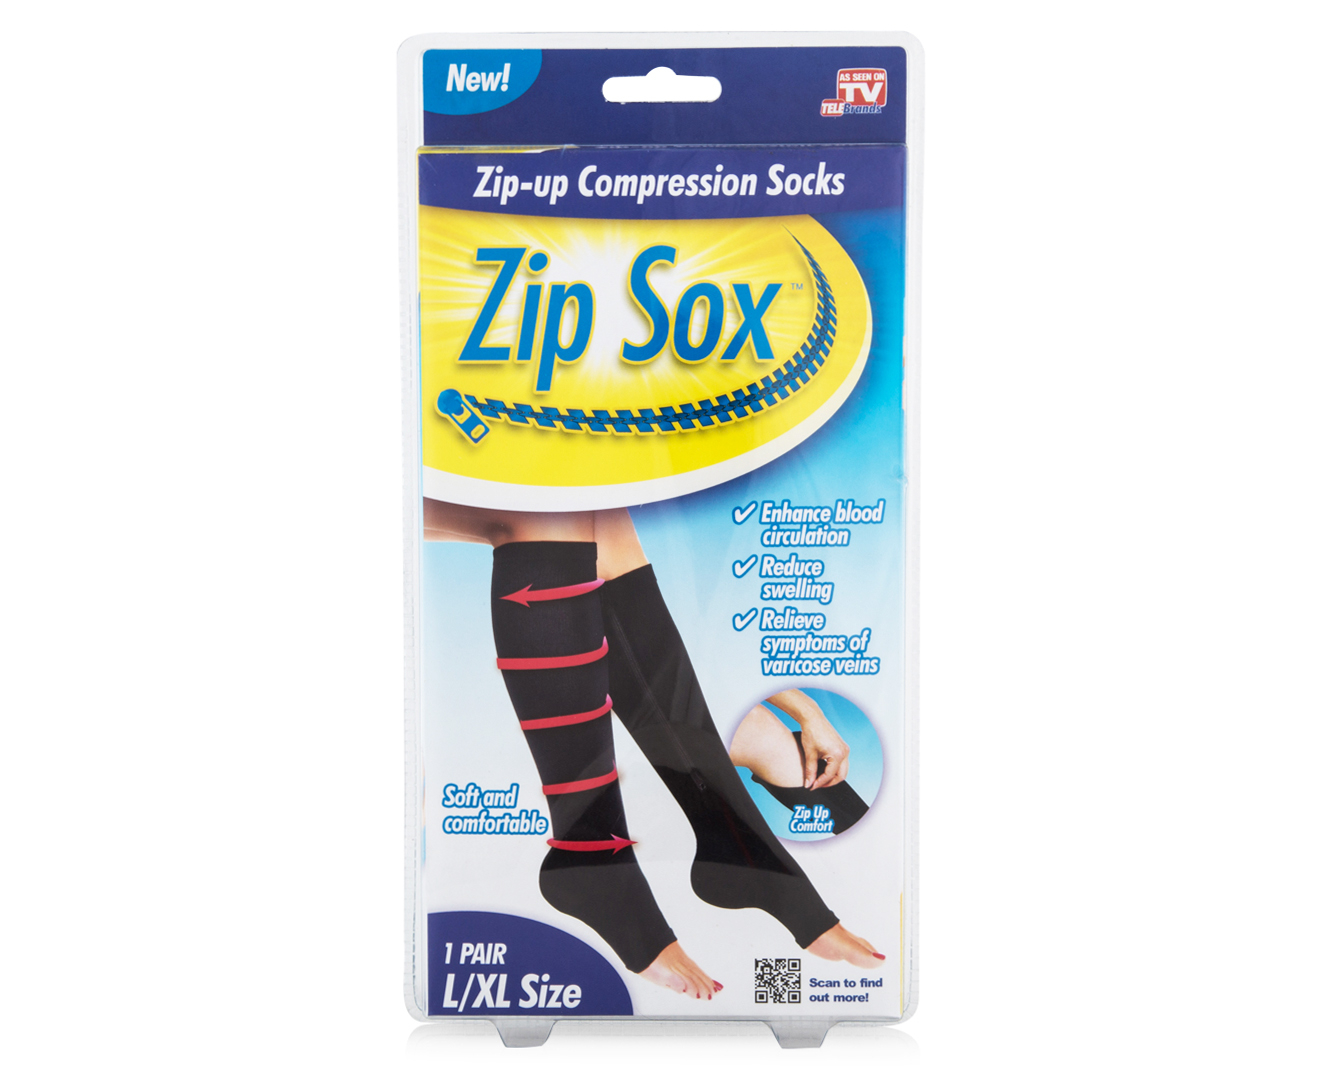 Zip Sox Size Chart